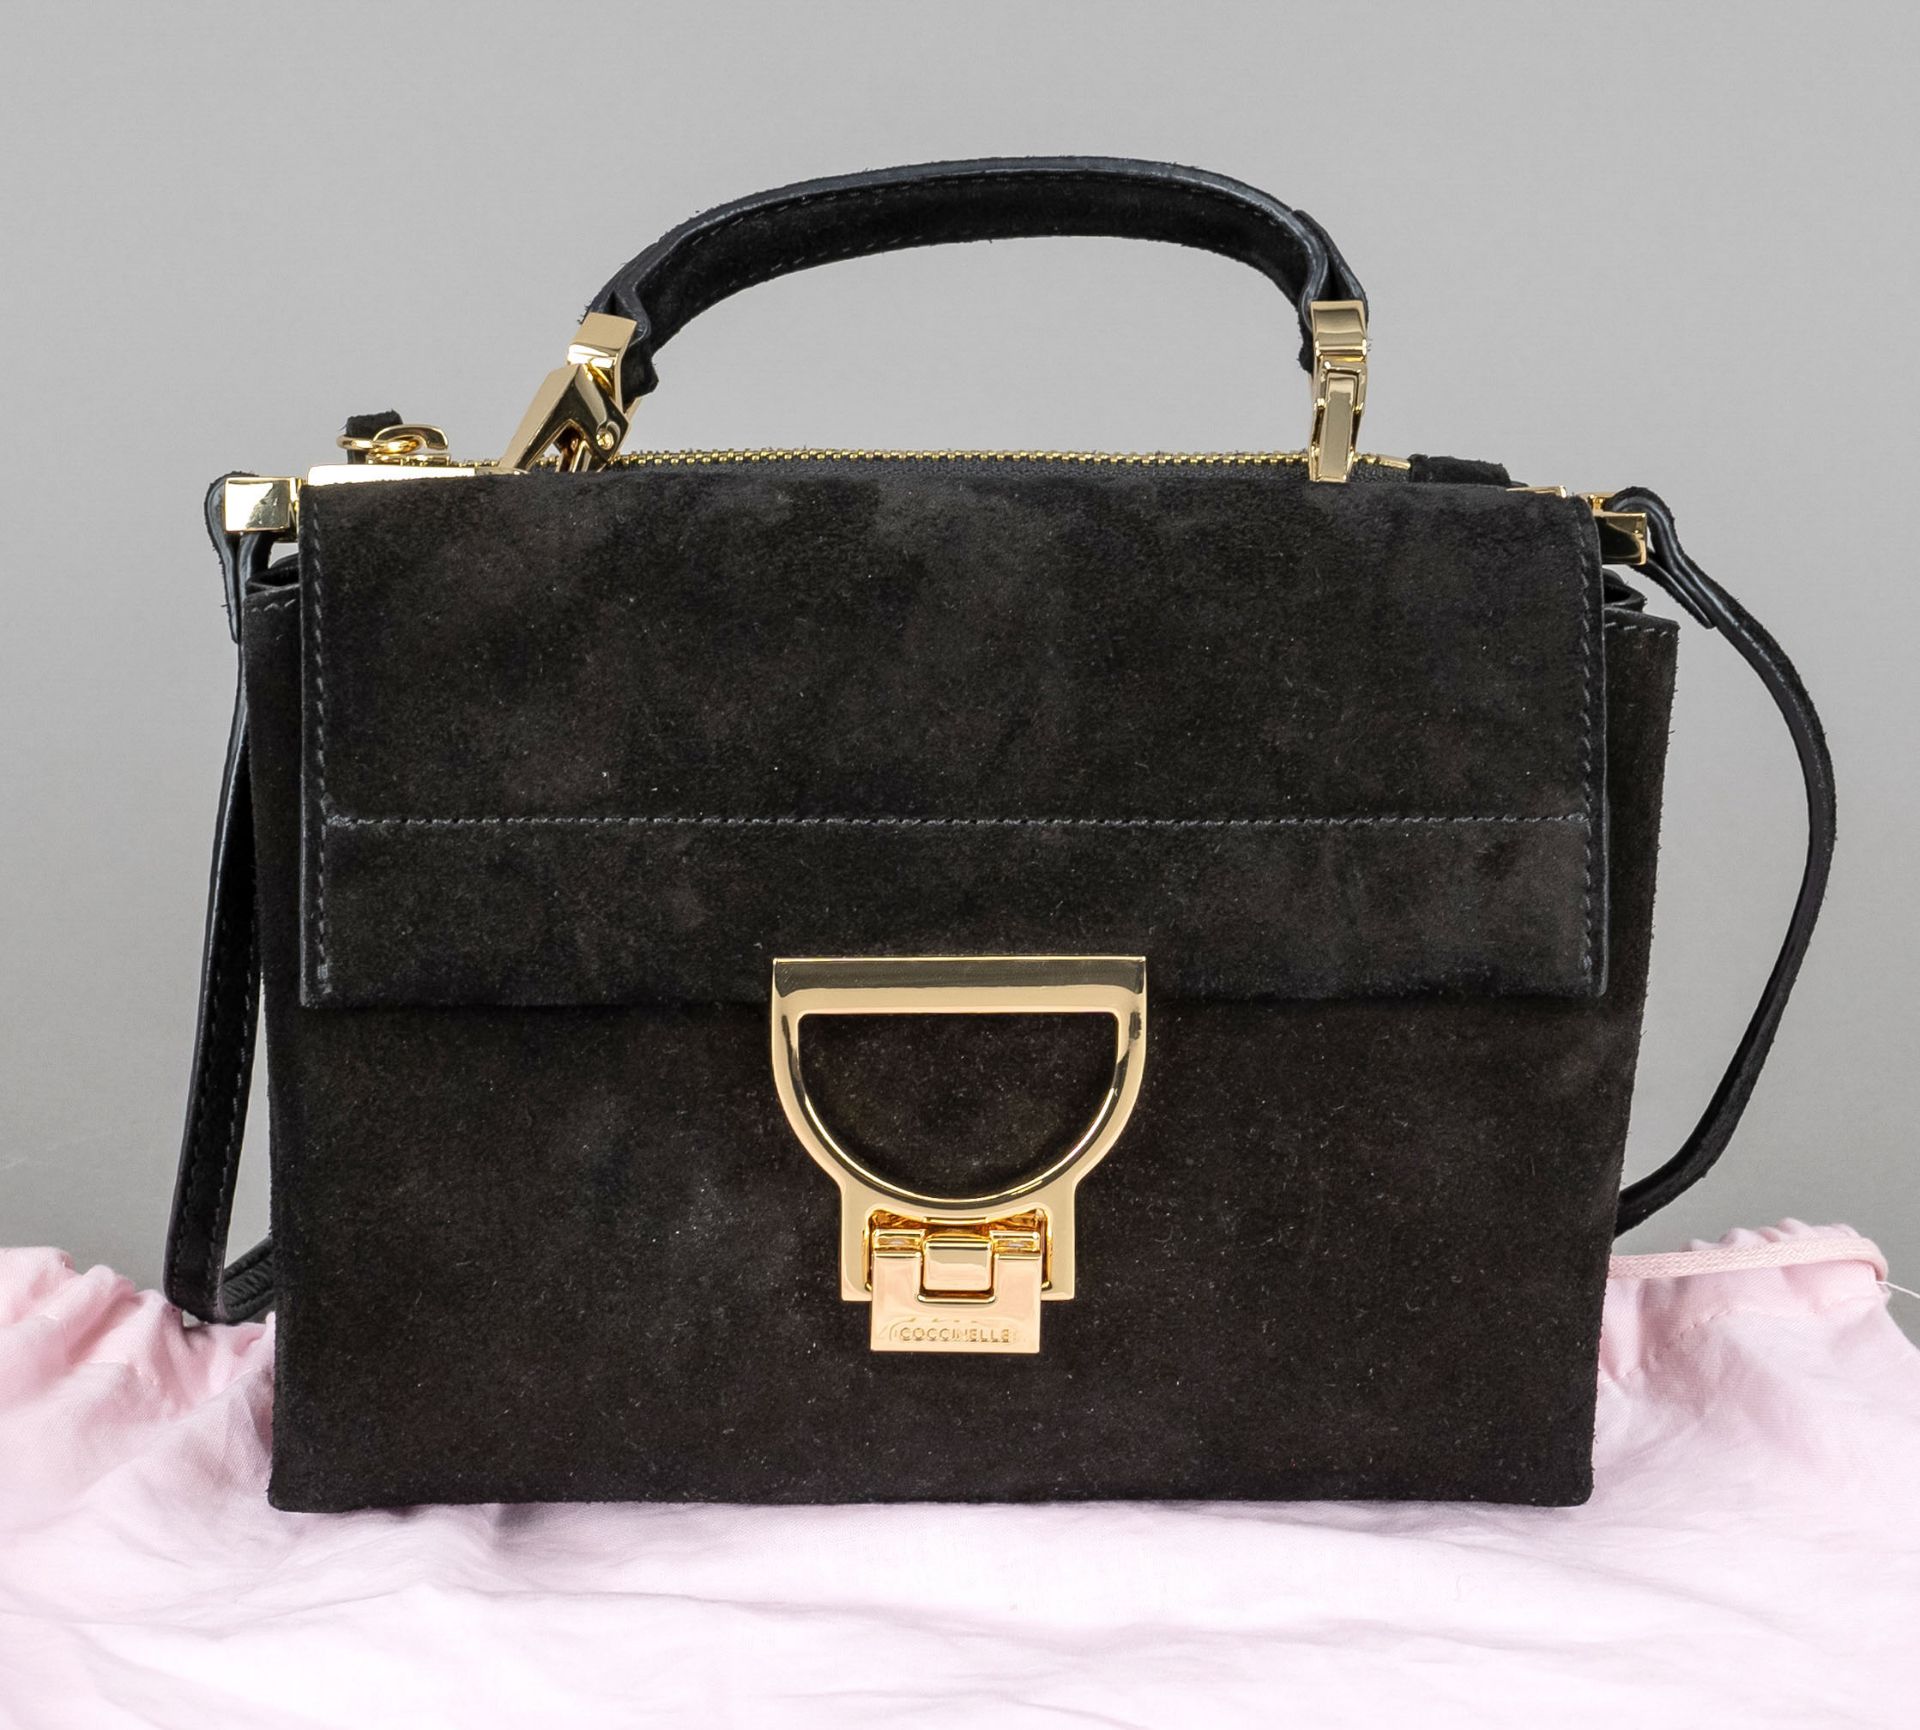 Coccinelle, Small Suede Shoulder Bag, black suede, gold-tone hardware, short detachable center